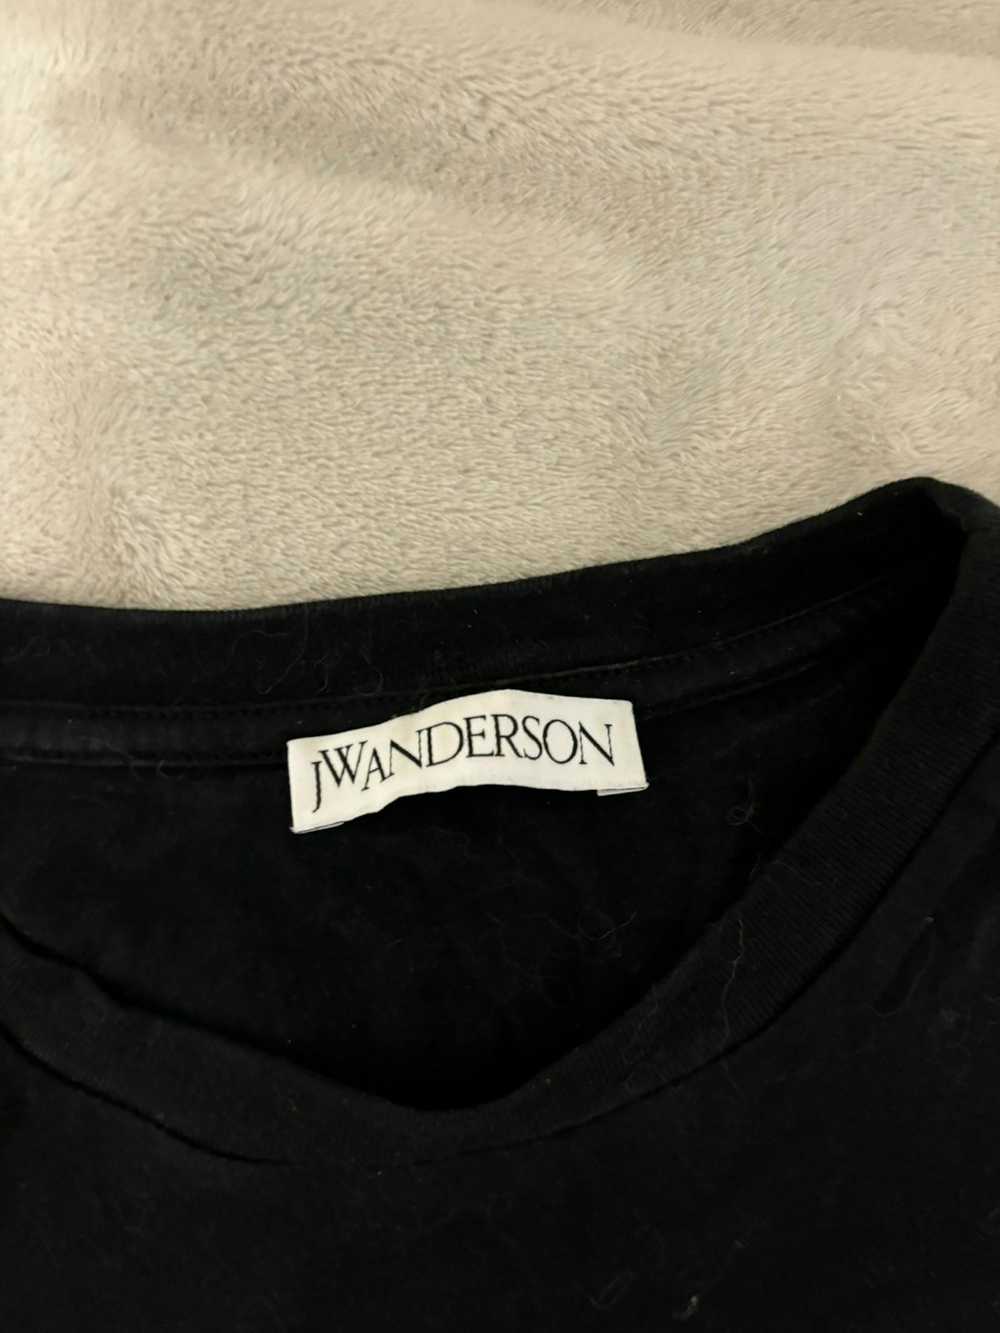 J.W.Anderson Jw Anderson graphic tshirt - image 3